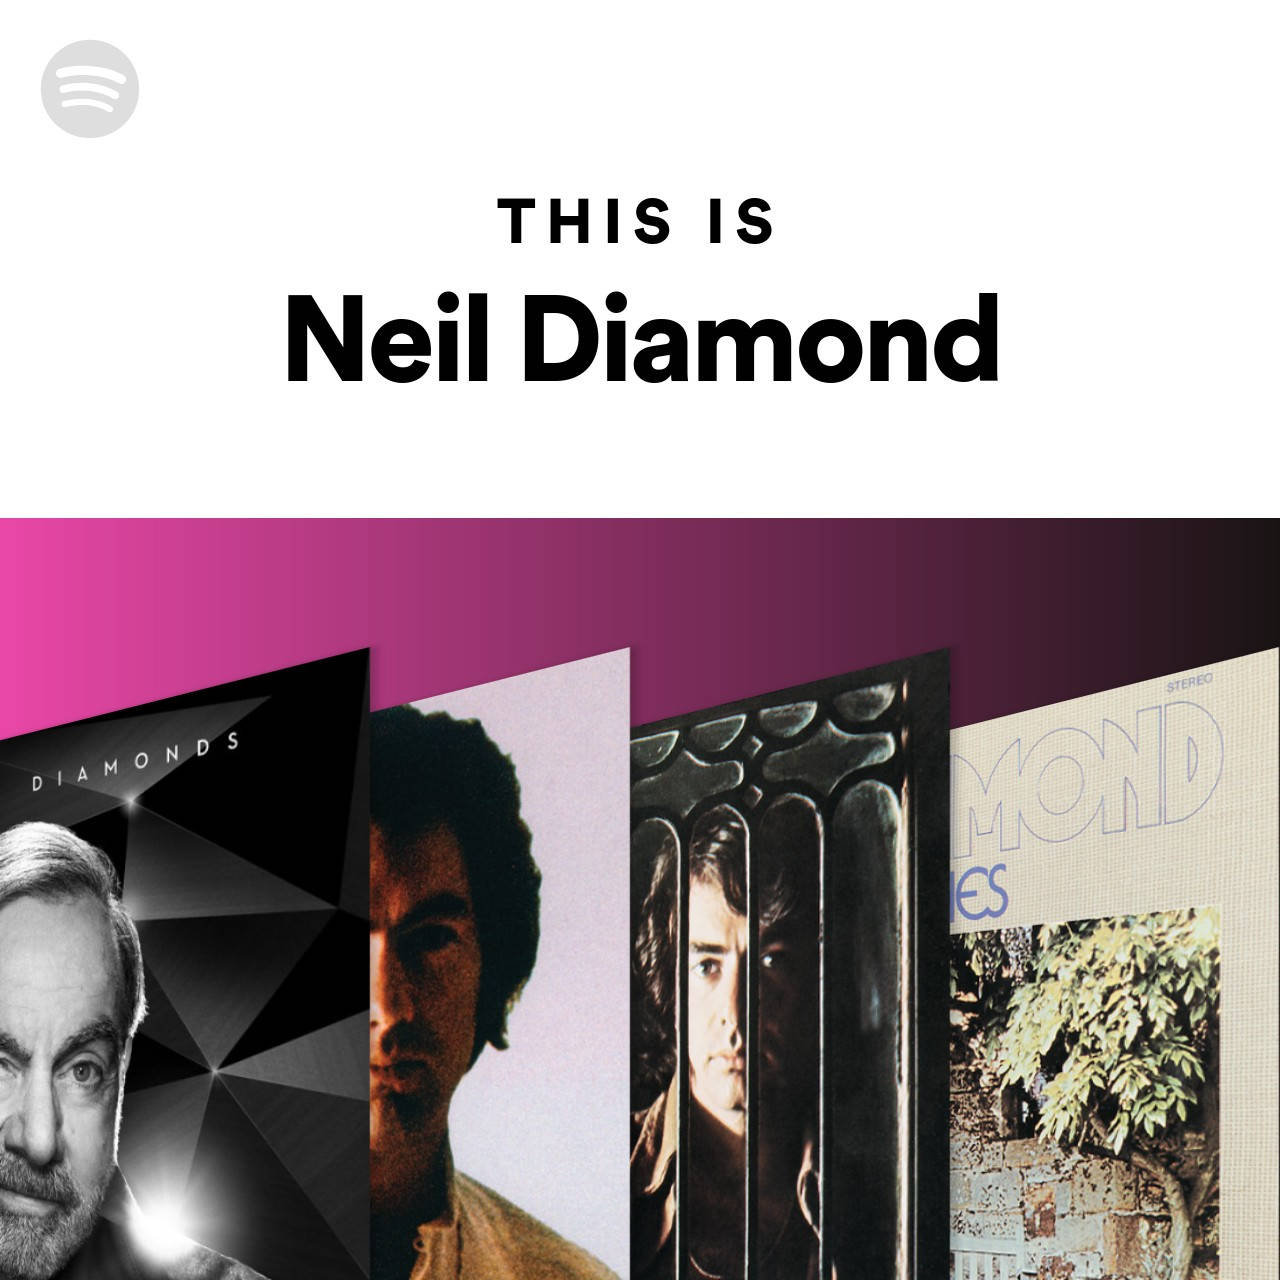 Neil Diamond Album Wallpaper